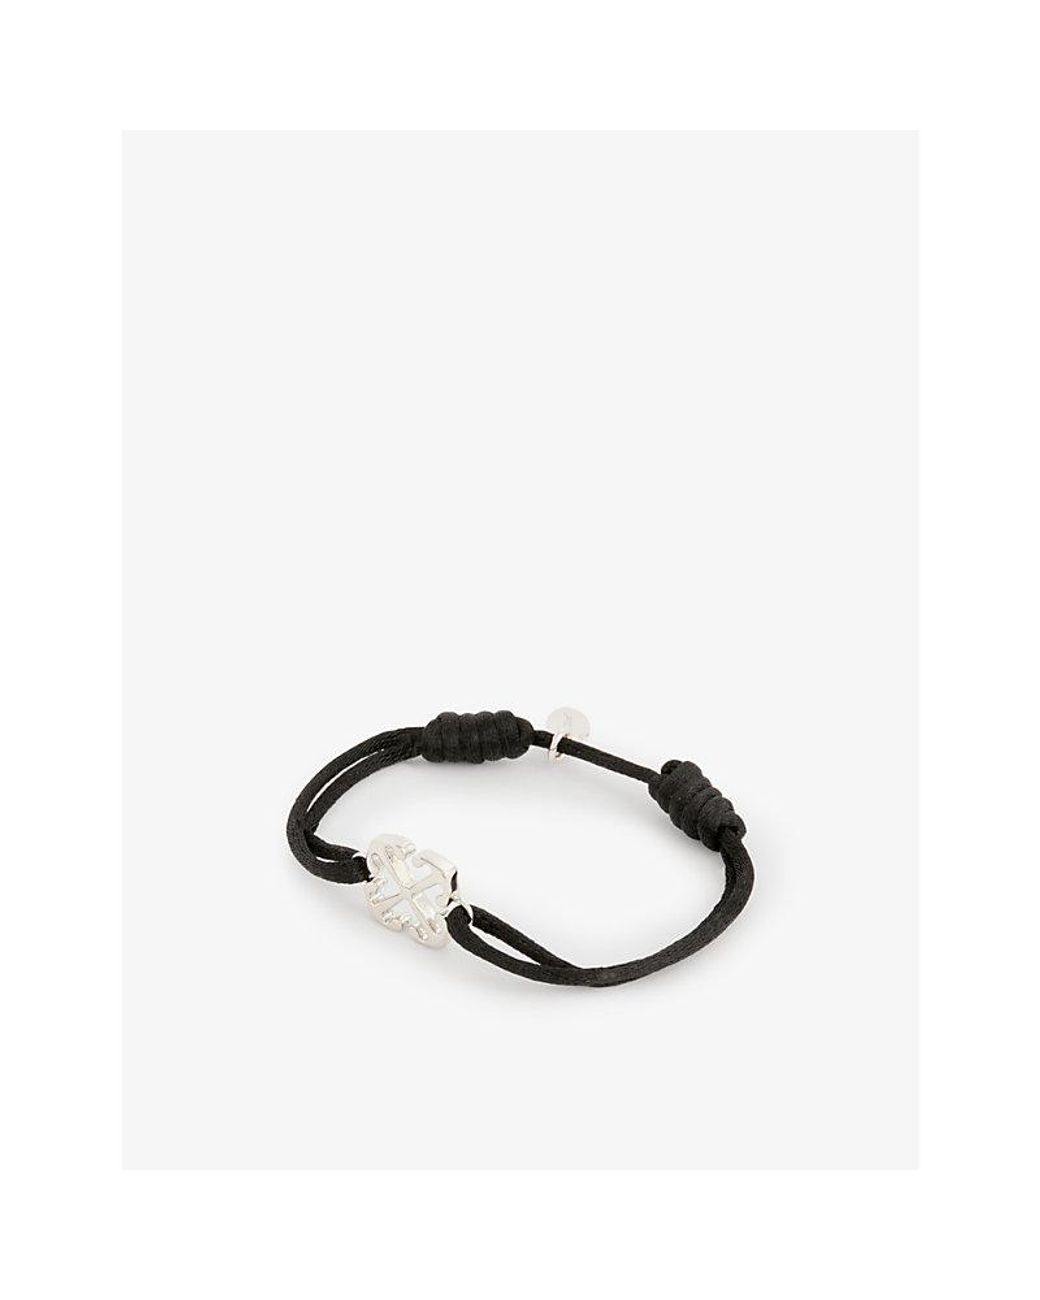 Off-White c/o Virgil Abloh Arrows Chain Bracelet in Metallic